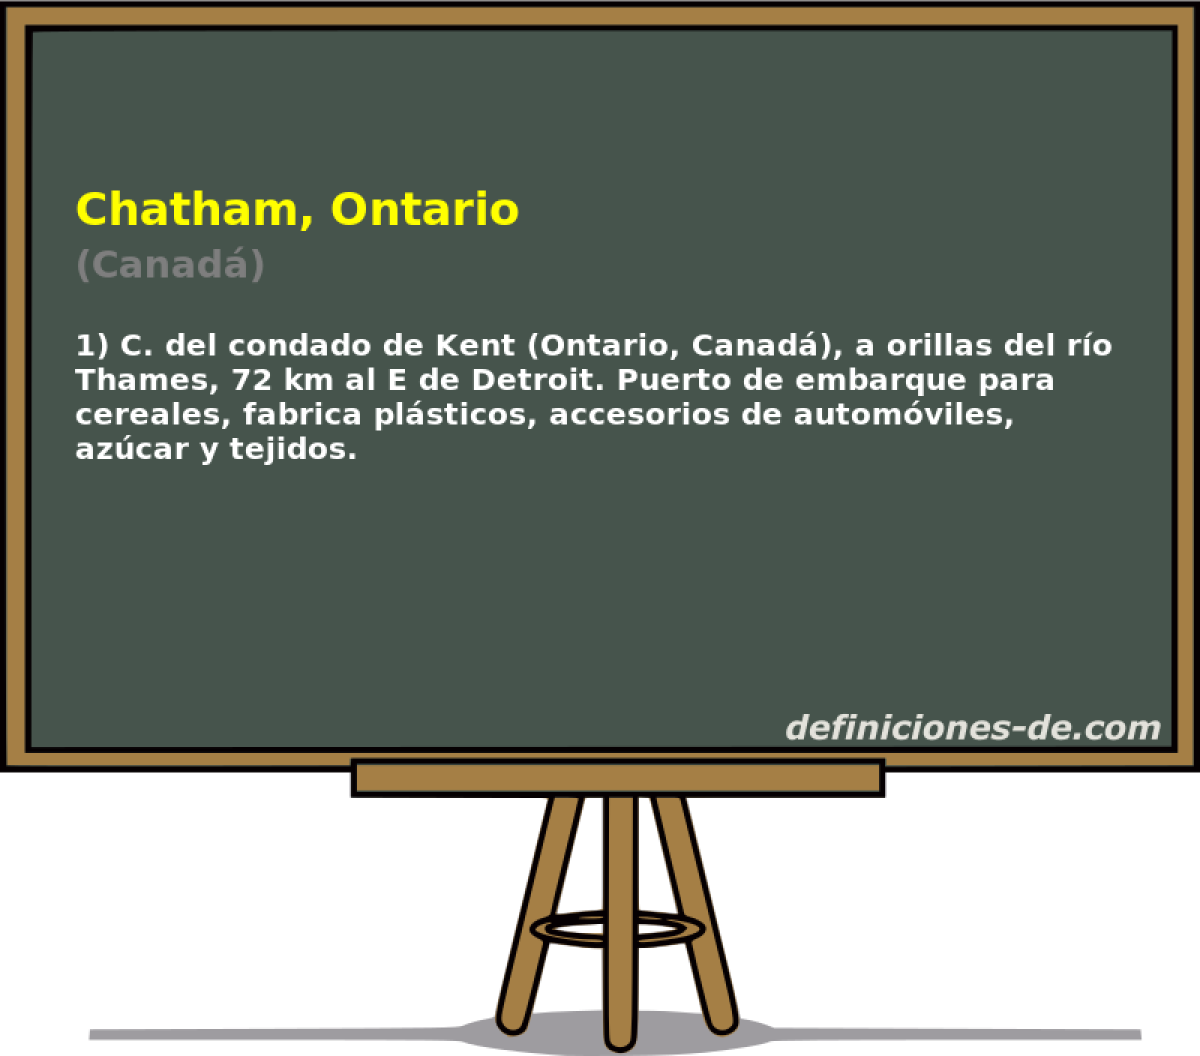 Chatham, Ontario (Canad)